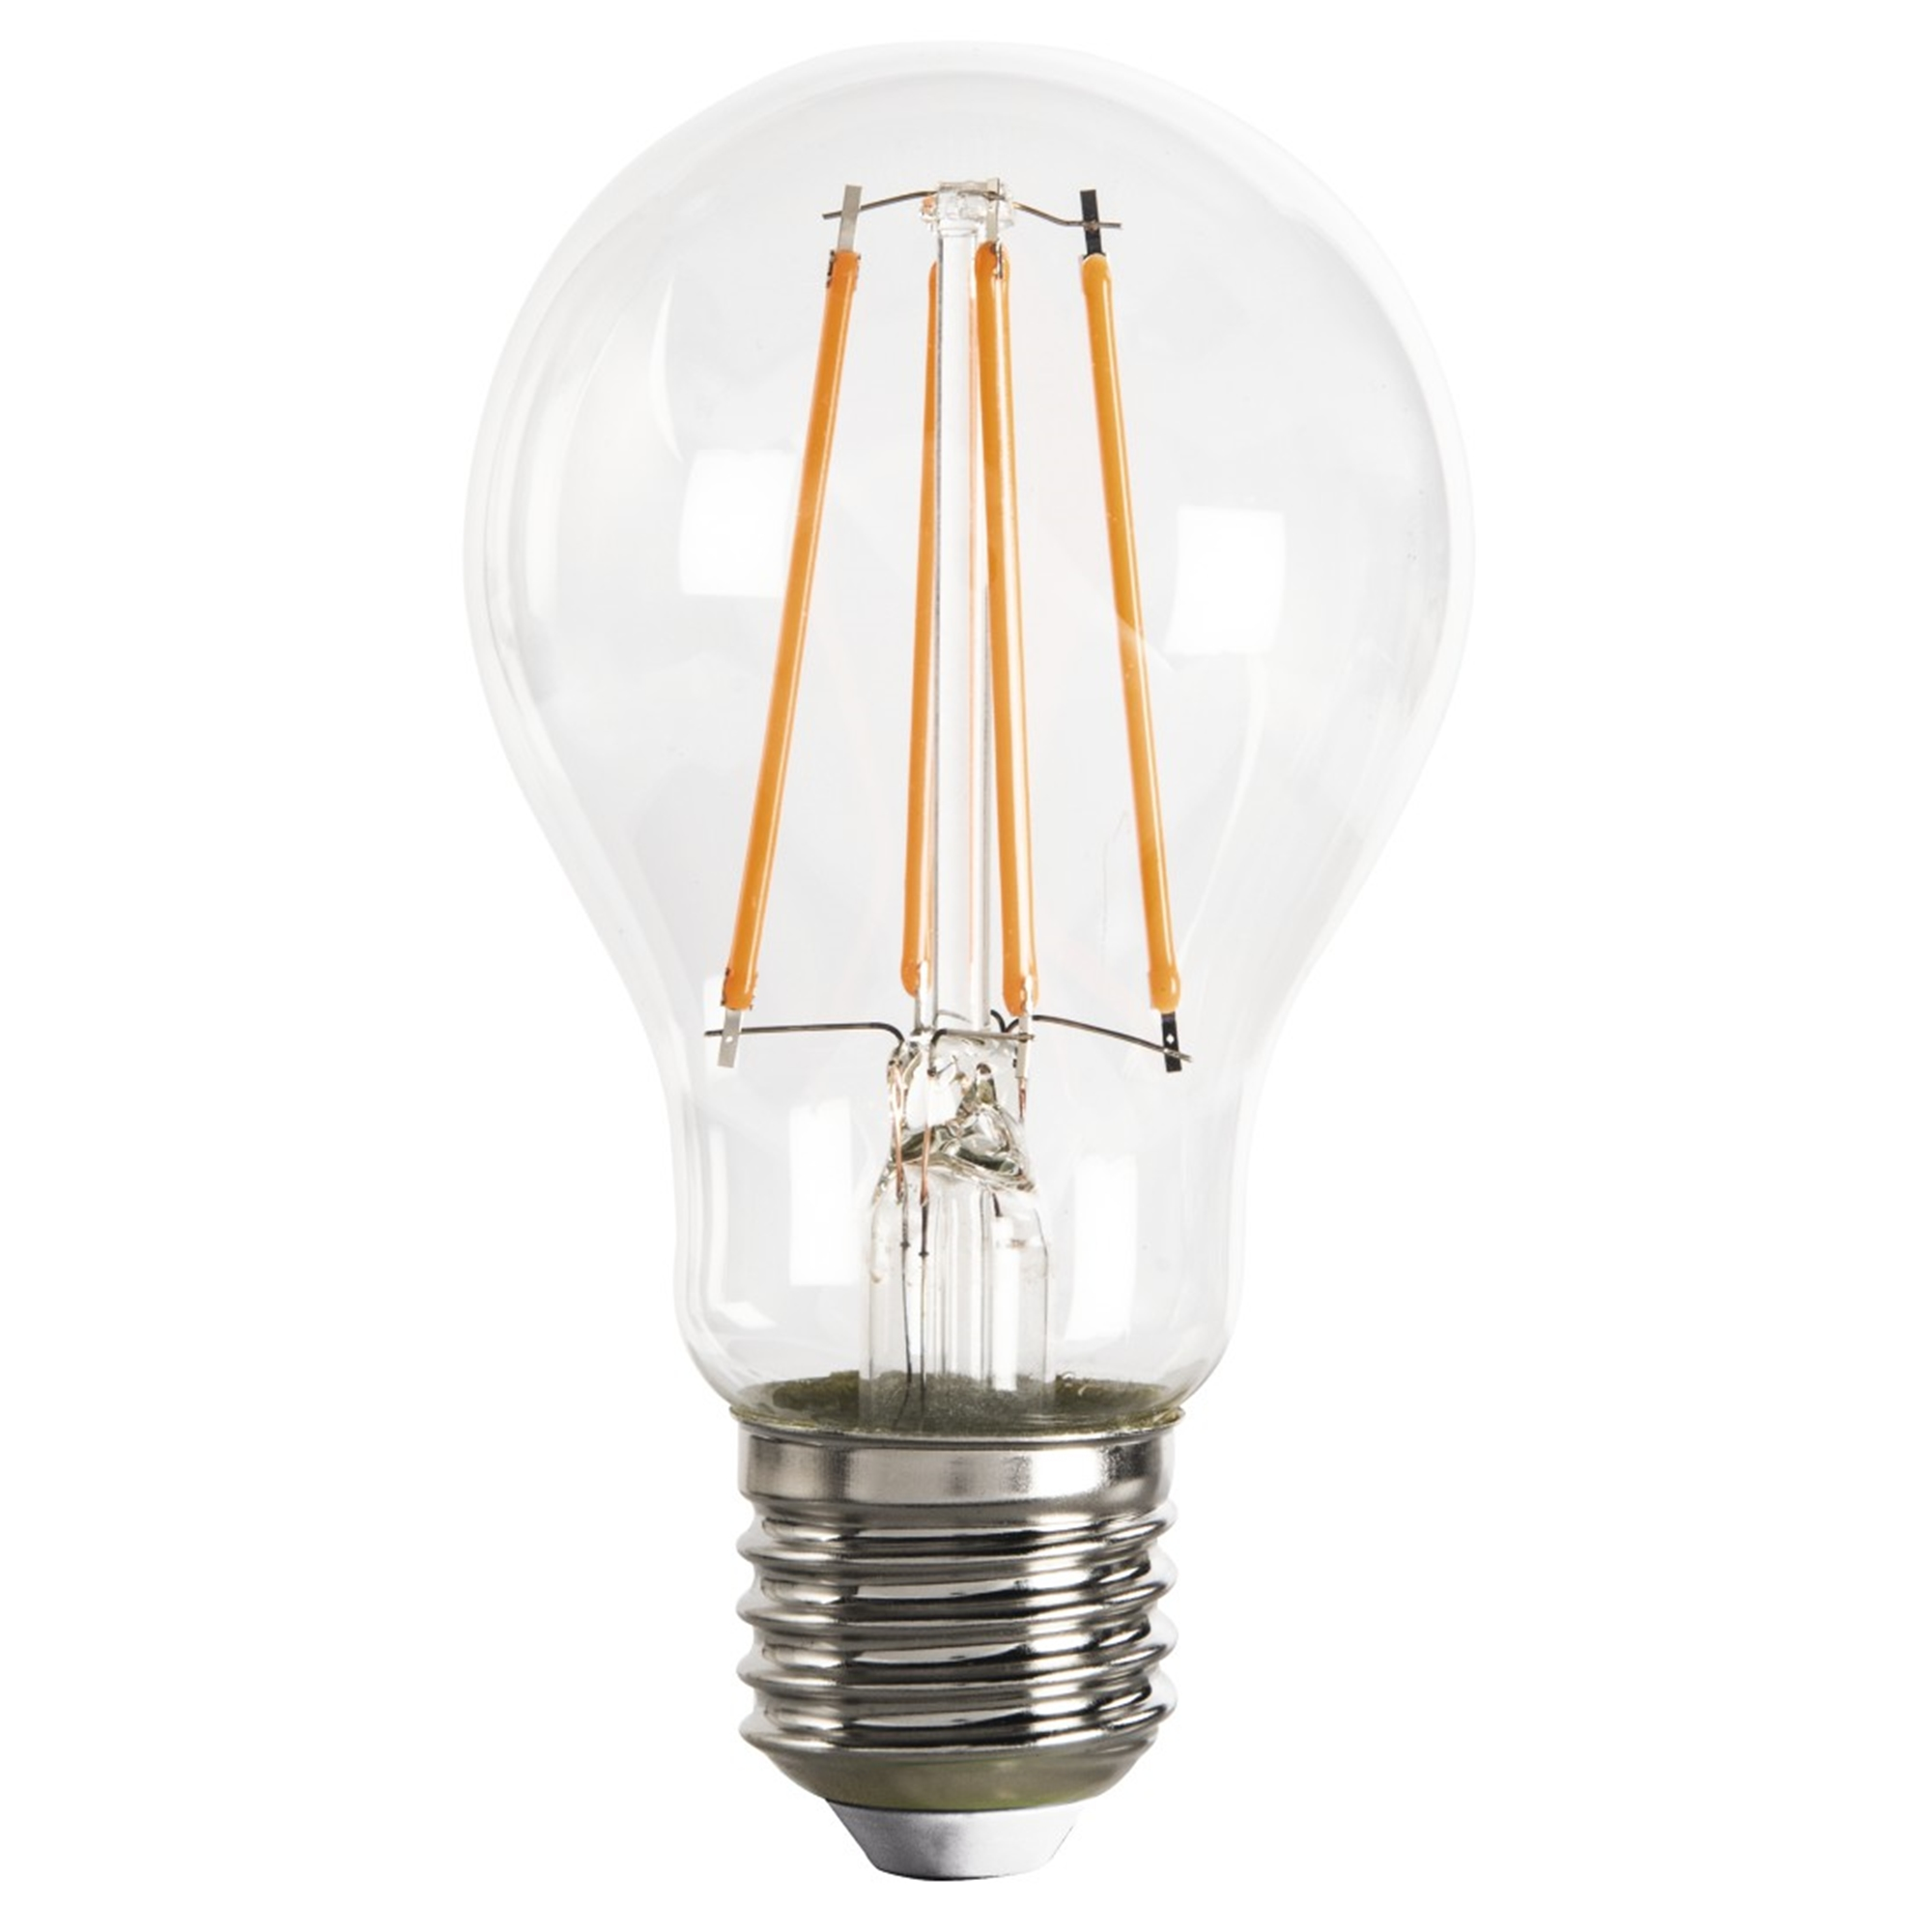 XAVAX Pflanzen-Wachstumslampe, E27, 8W LED-Lampe Violett E27